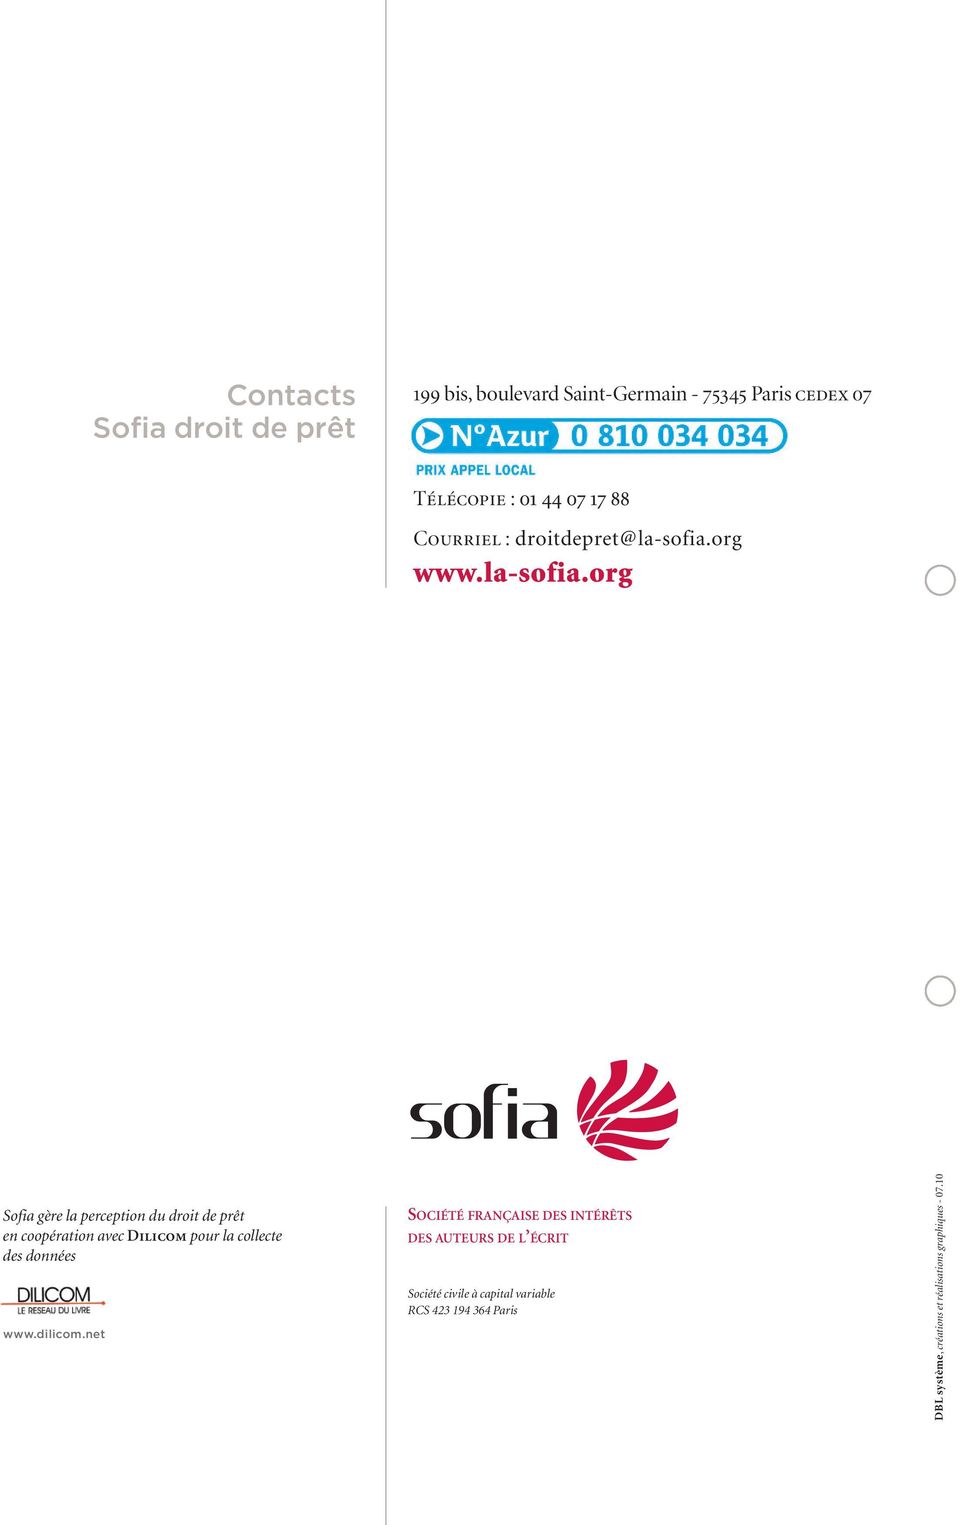 org www.la-sofia.